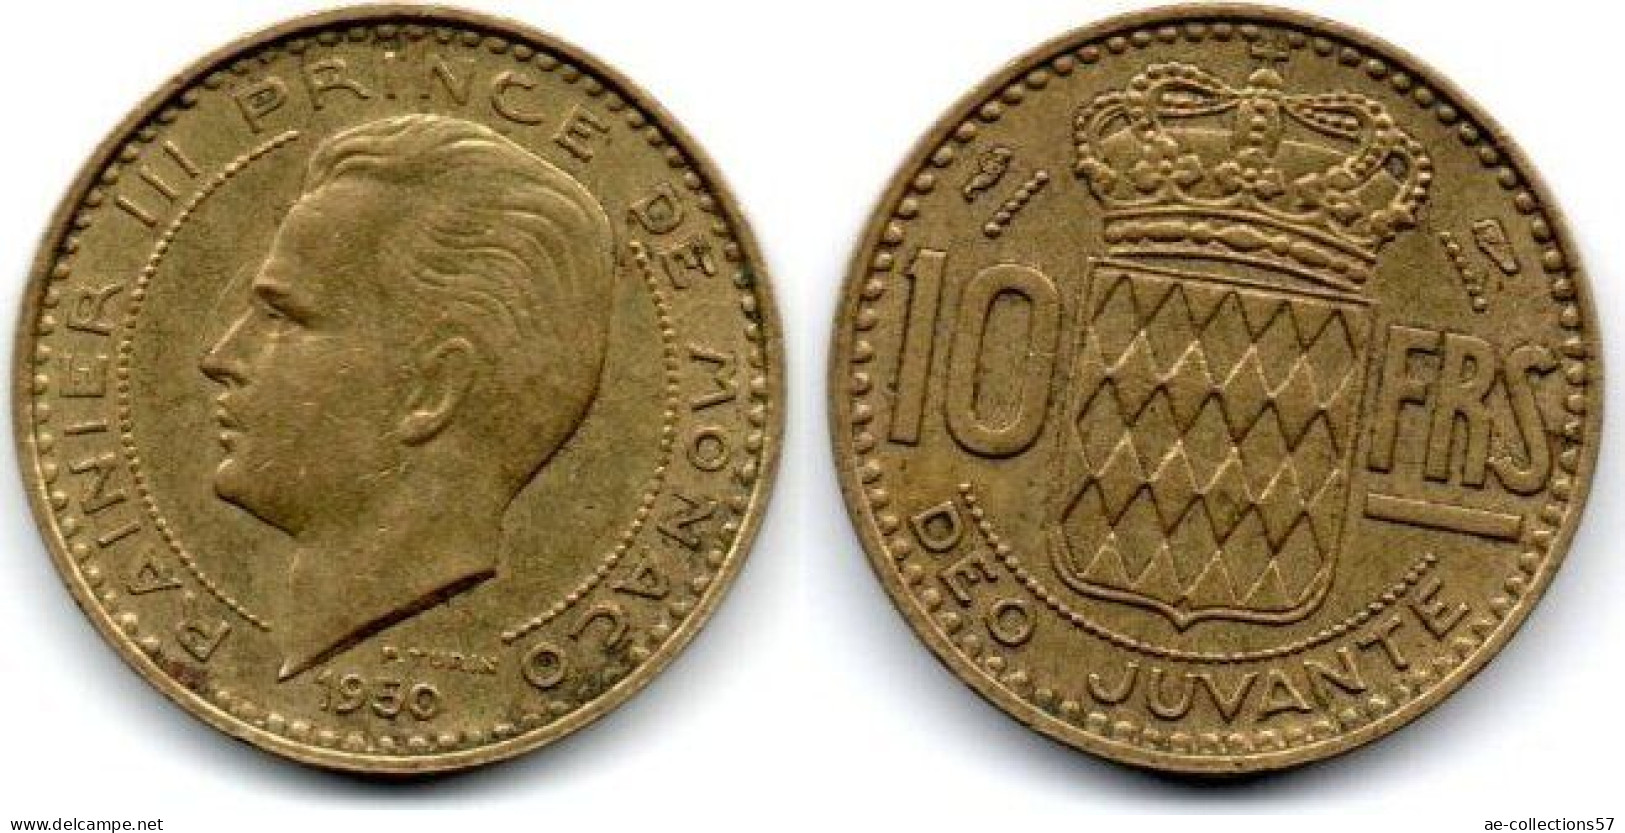 MA 29874 / Monaco 10 Francs 1950 TTB - 1949-1956 Franchi Antichi